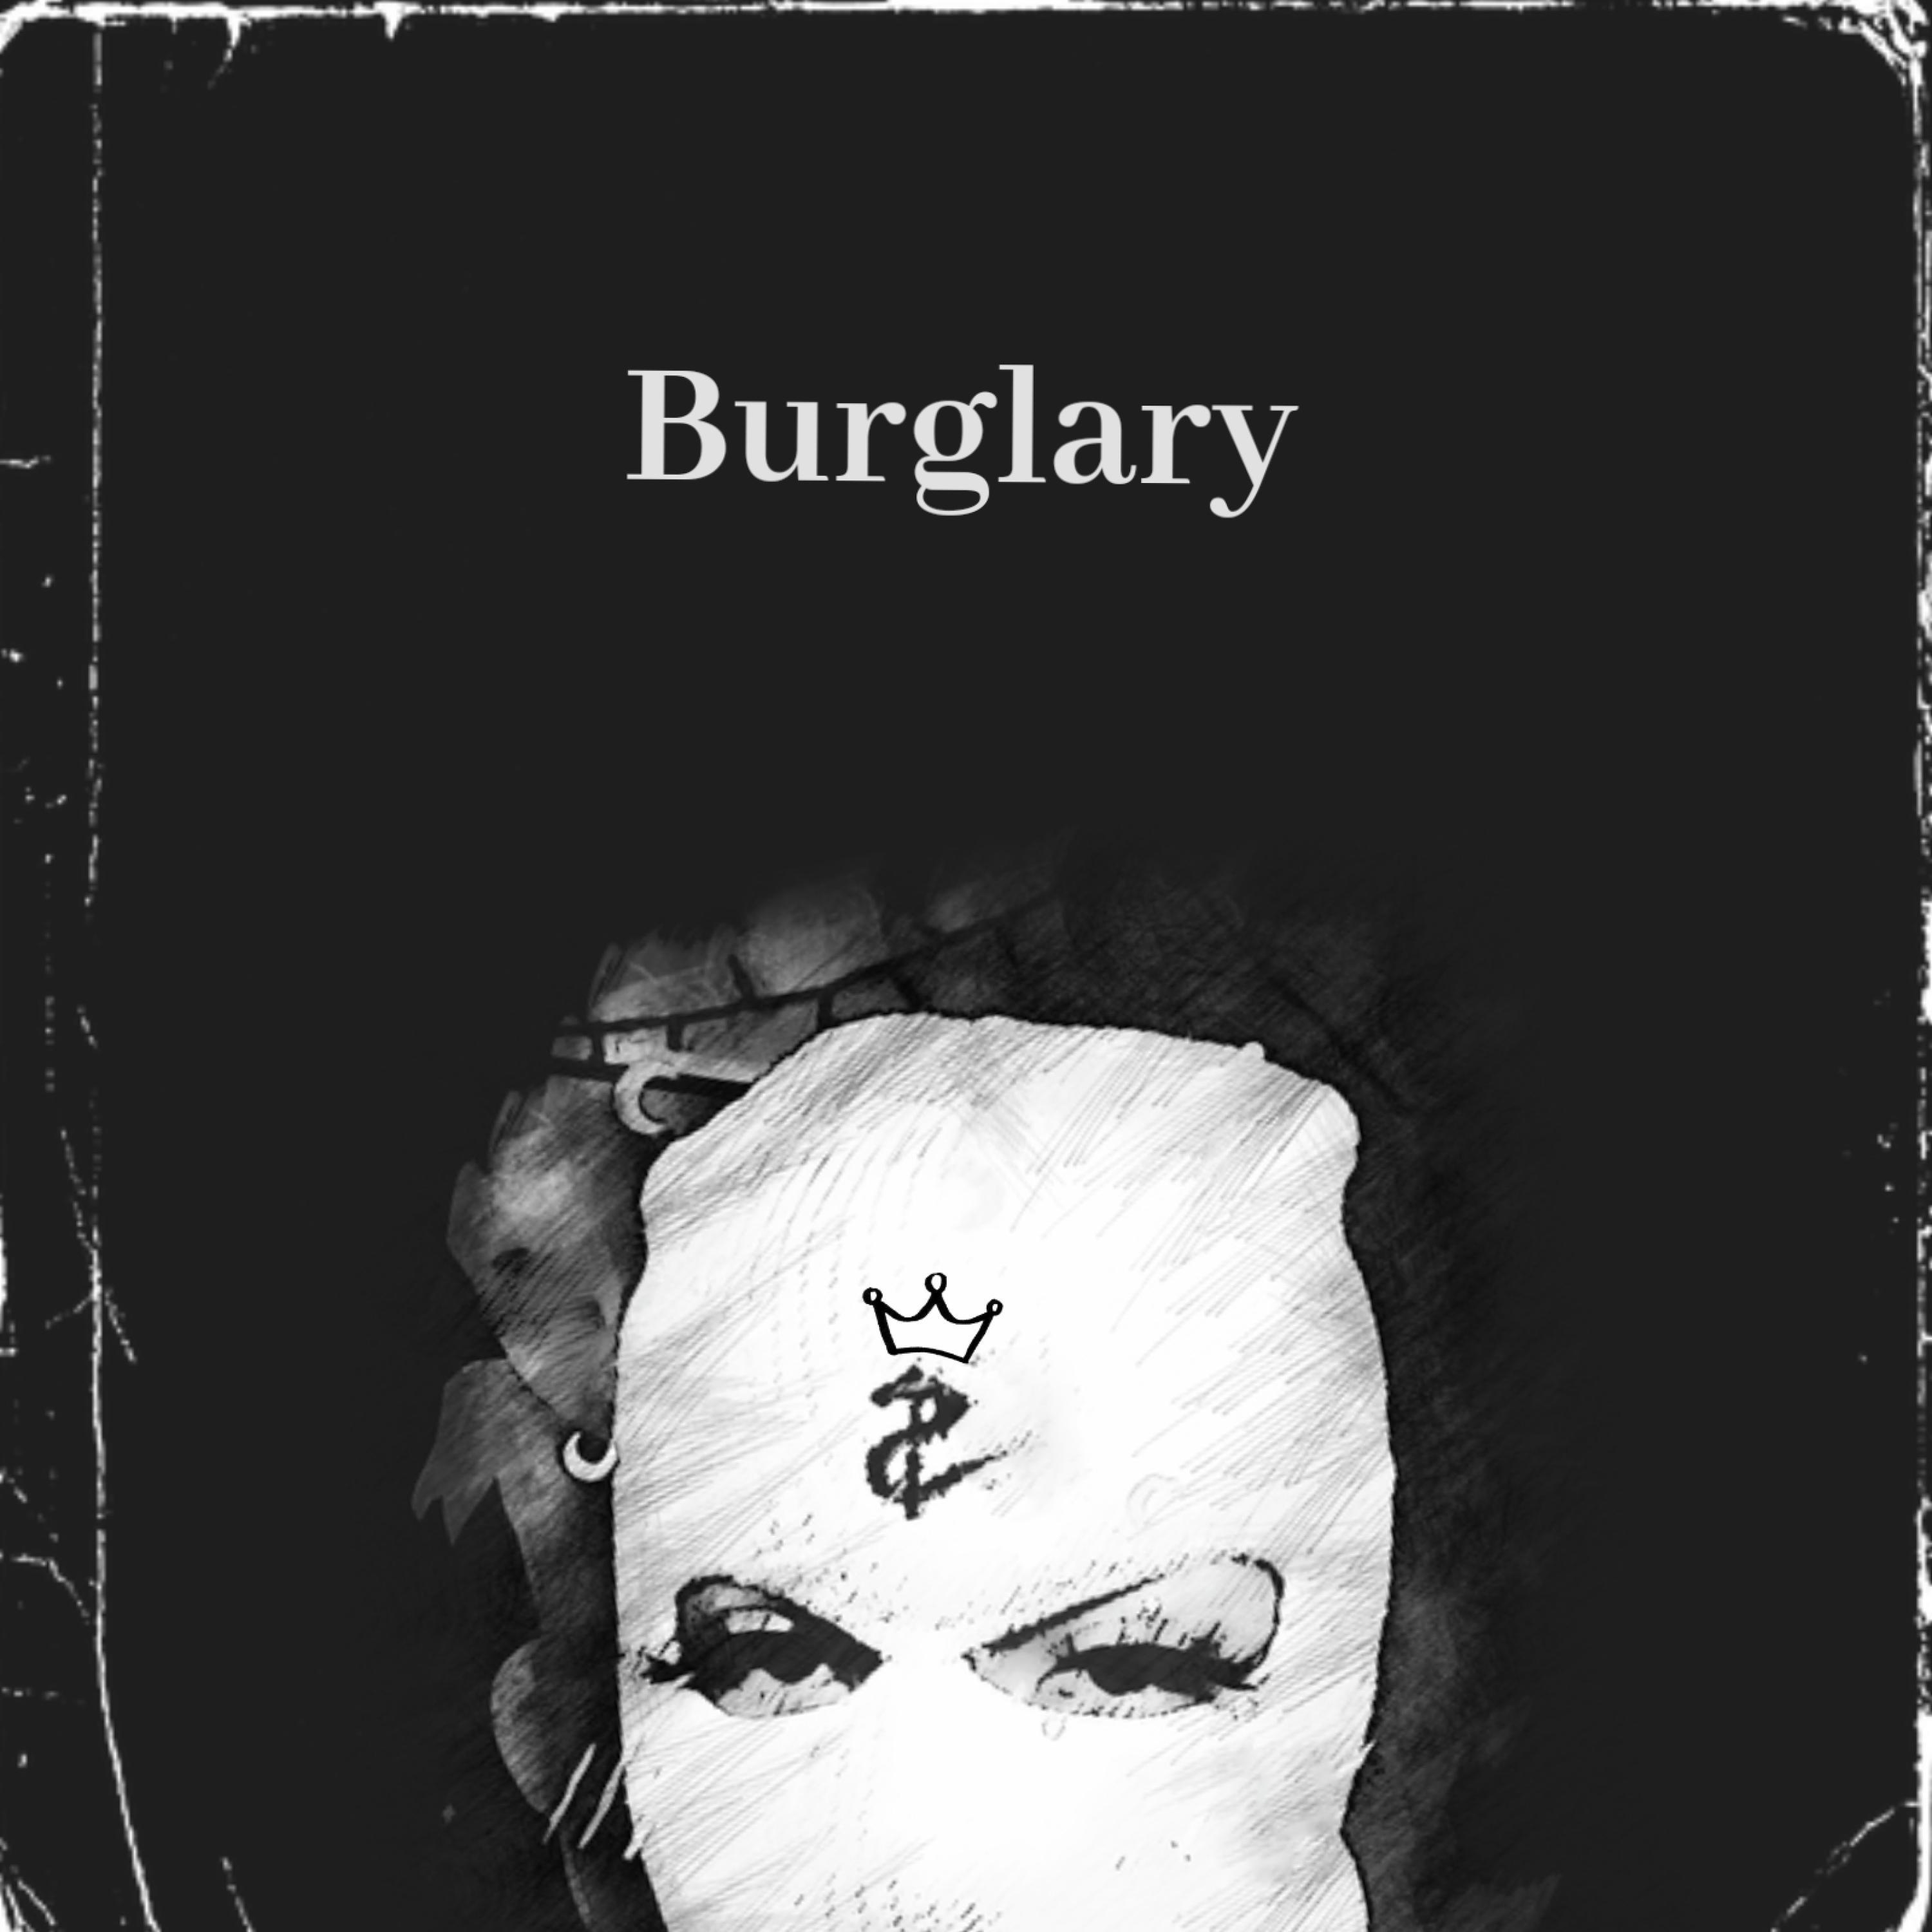 Men tor lee - Burglary (feat. Habstrakt, guardin & PinkPantheress)